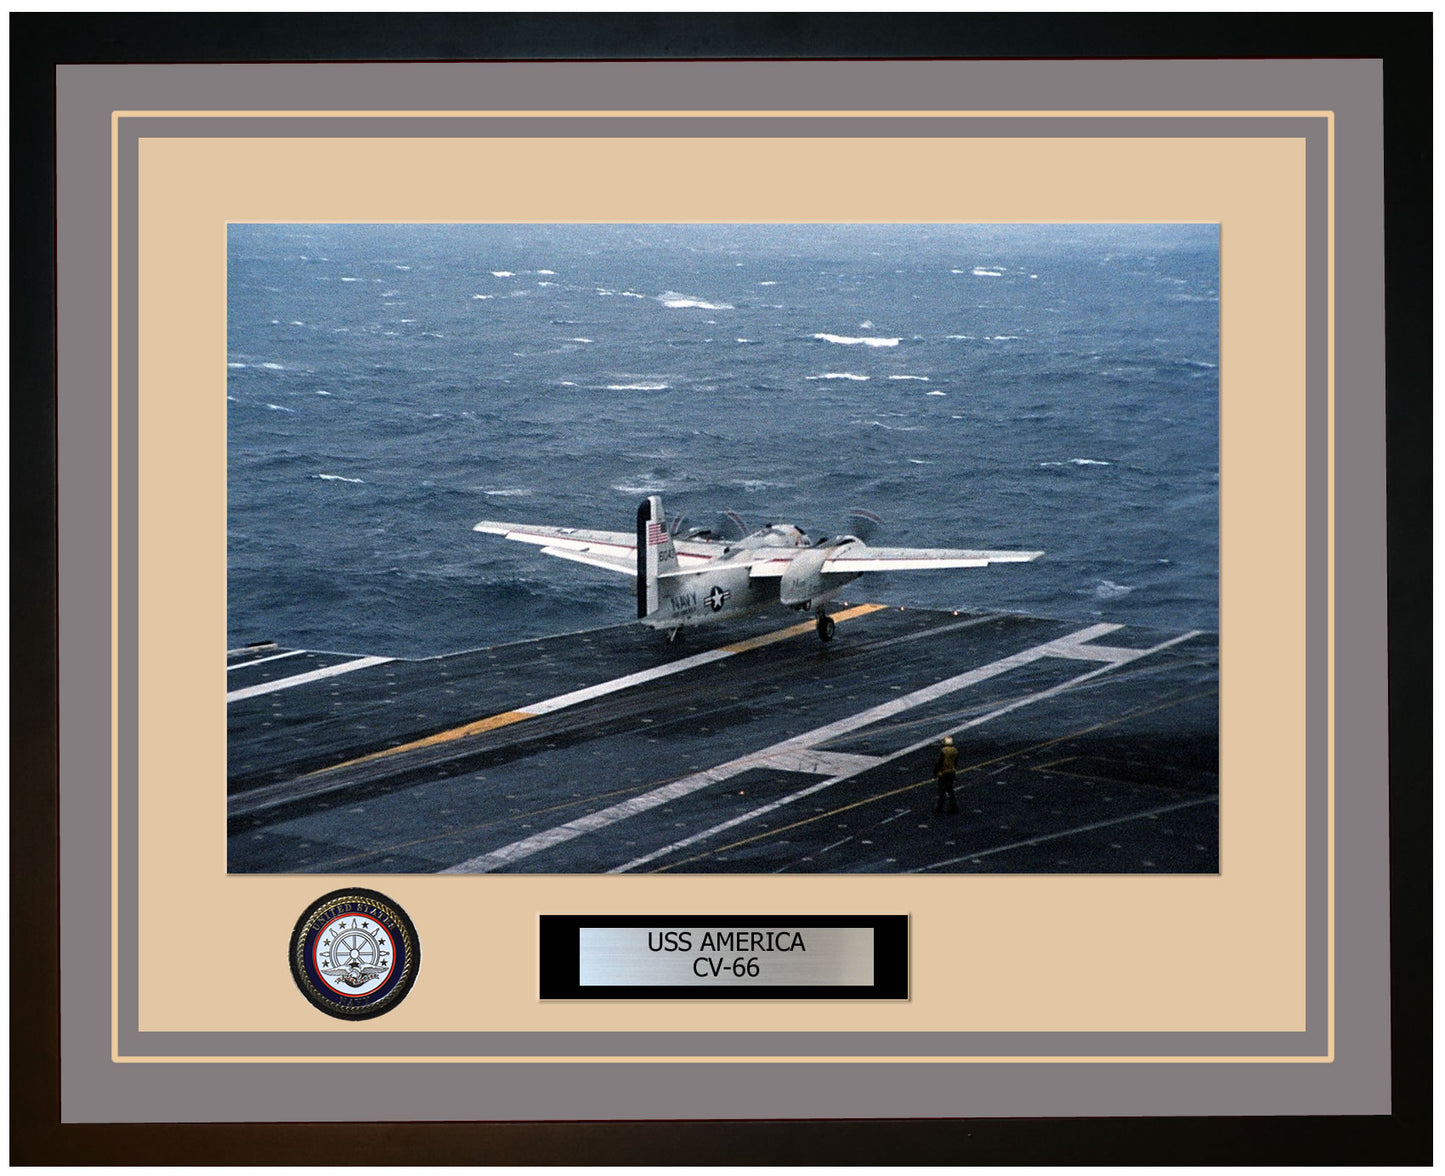 USS AMERICA CV-66 Framed Navy Ship Photo Grey